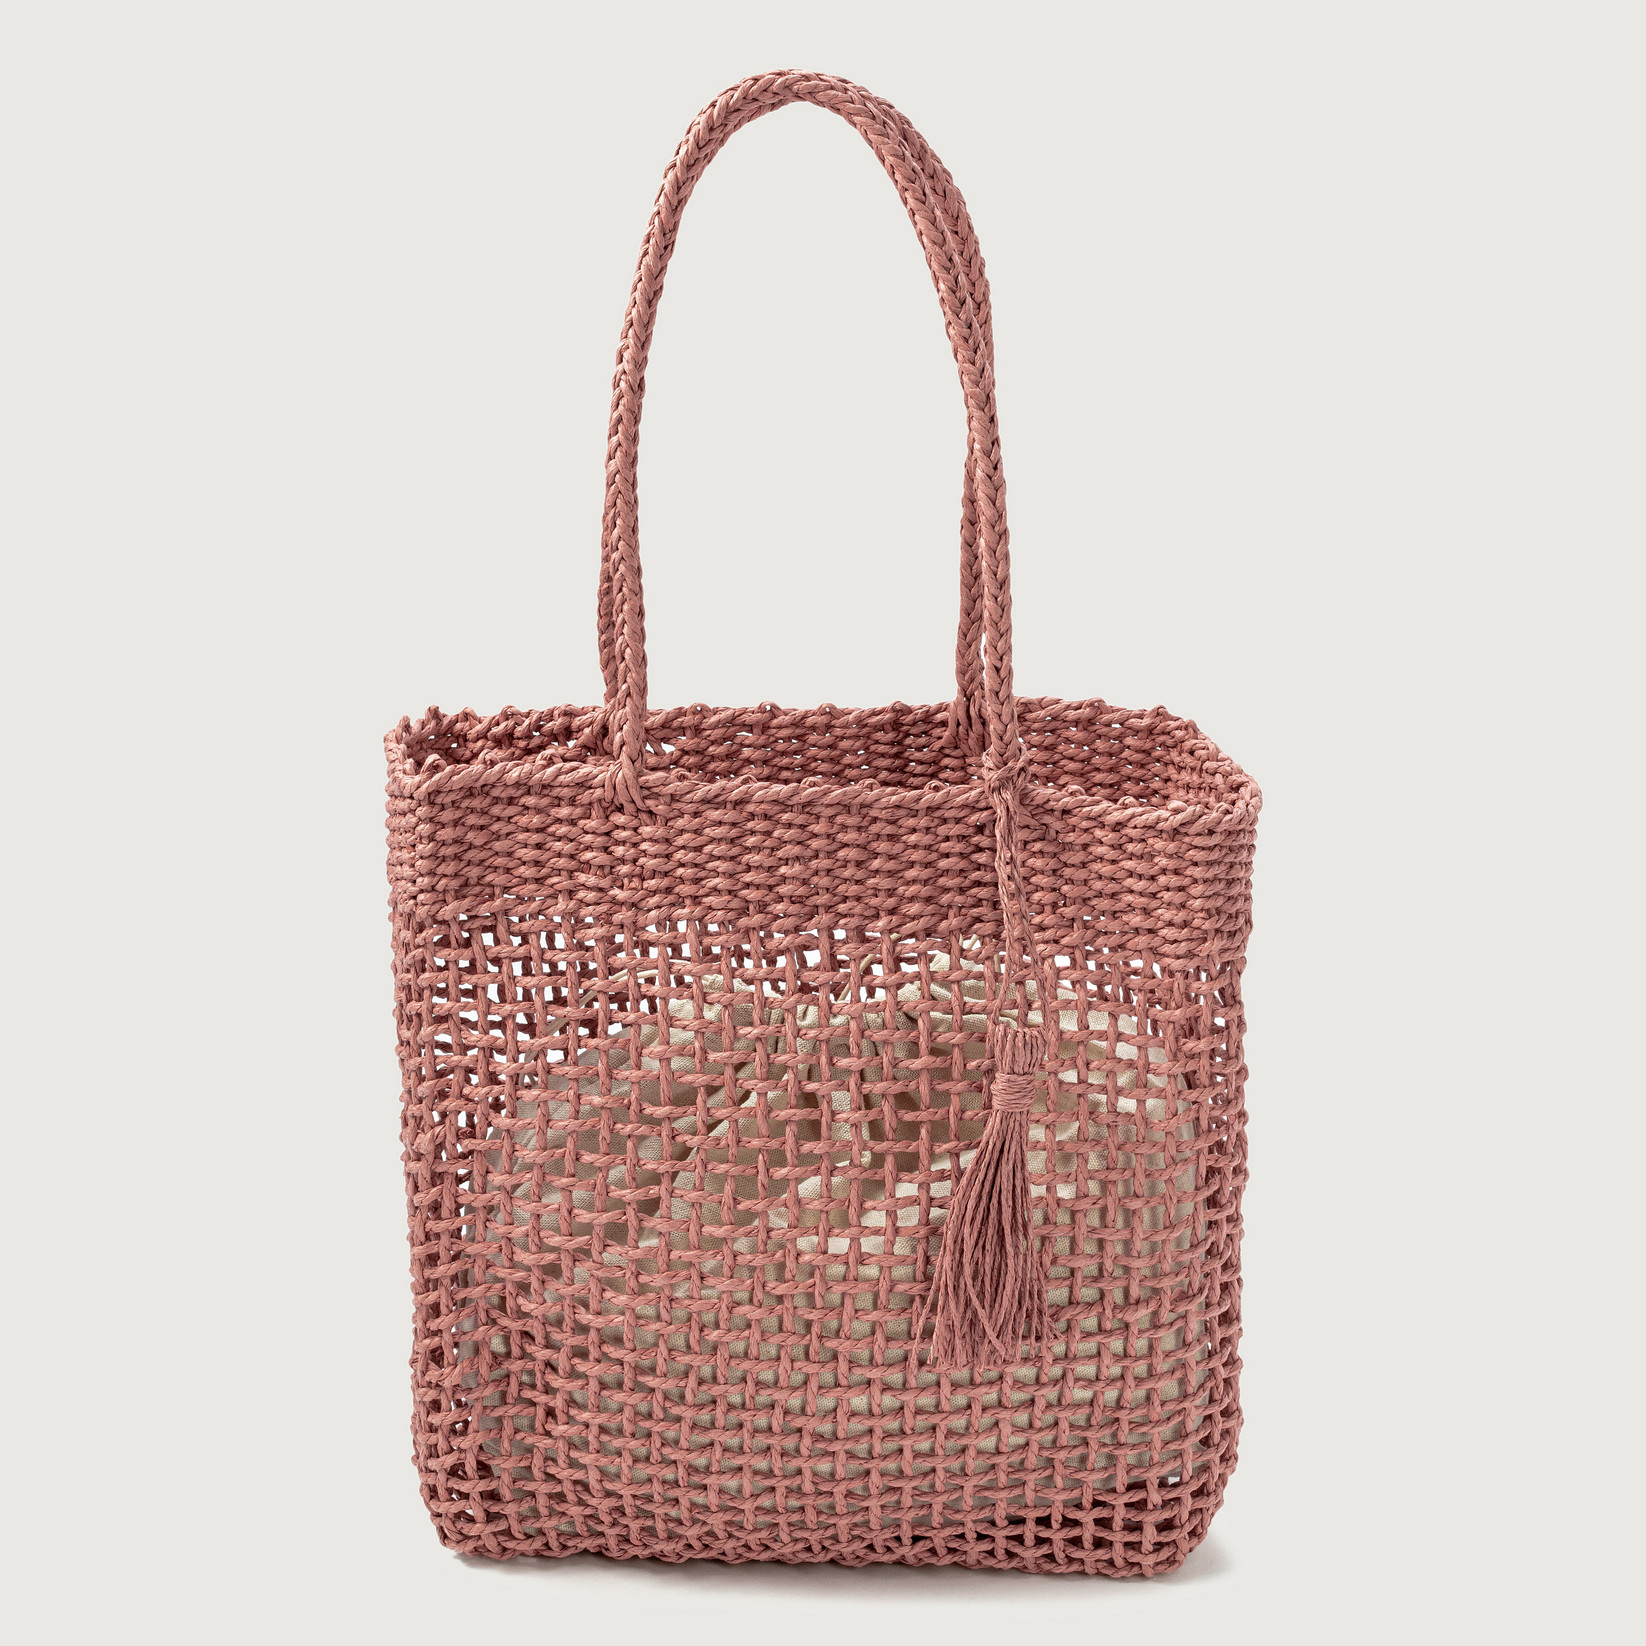 Hallhuber basket bag made of high -quality paper straw rose quartz, one size